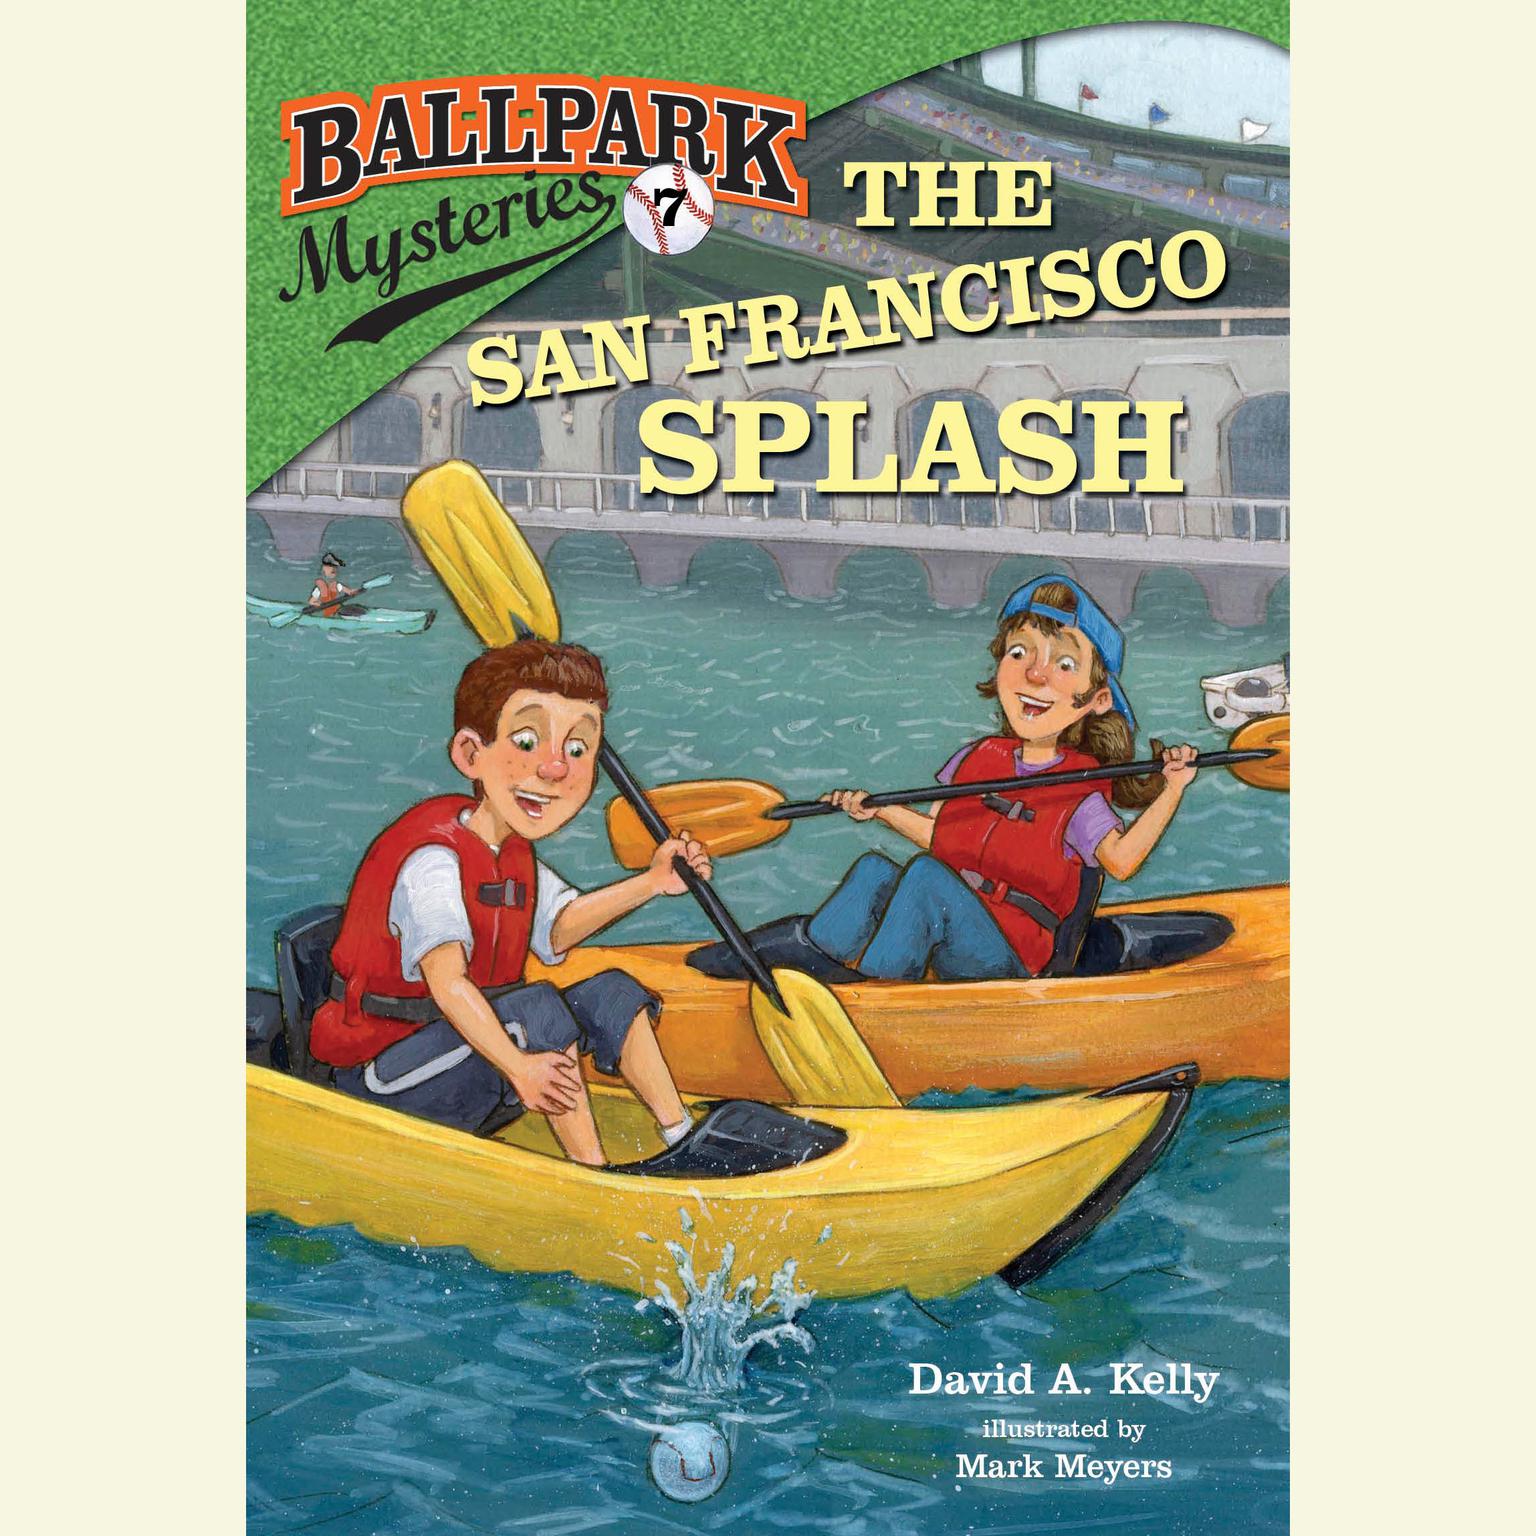 Ballpark Mysteries #7: The San Francisco Splash Audiobook, by David A. Kelly